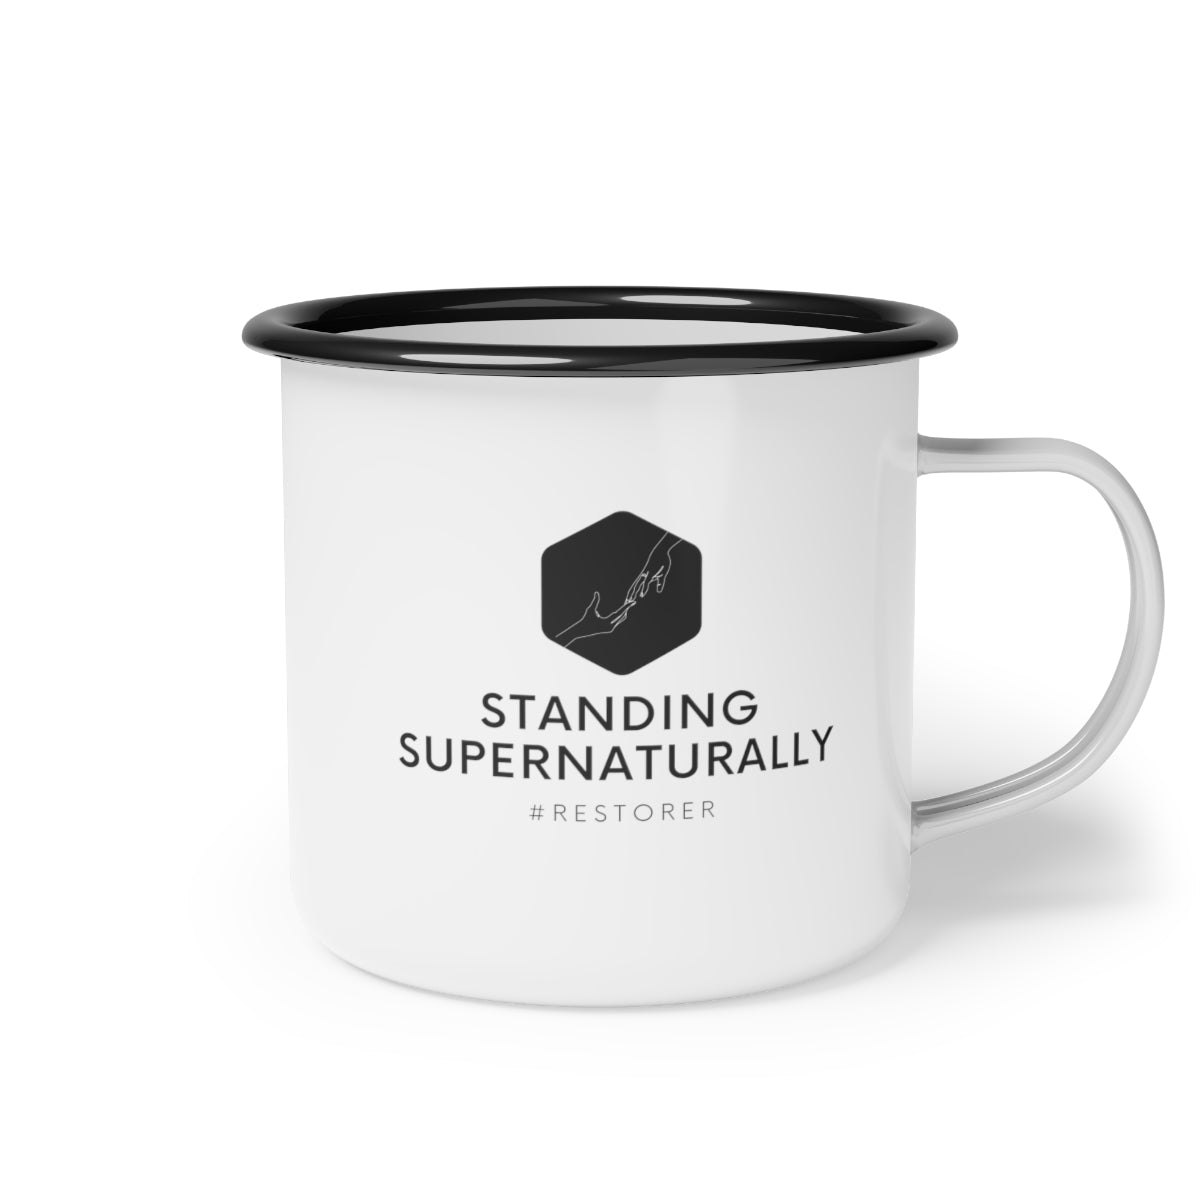 "Standing Supernaturally" - Small Camp Mug